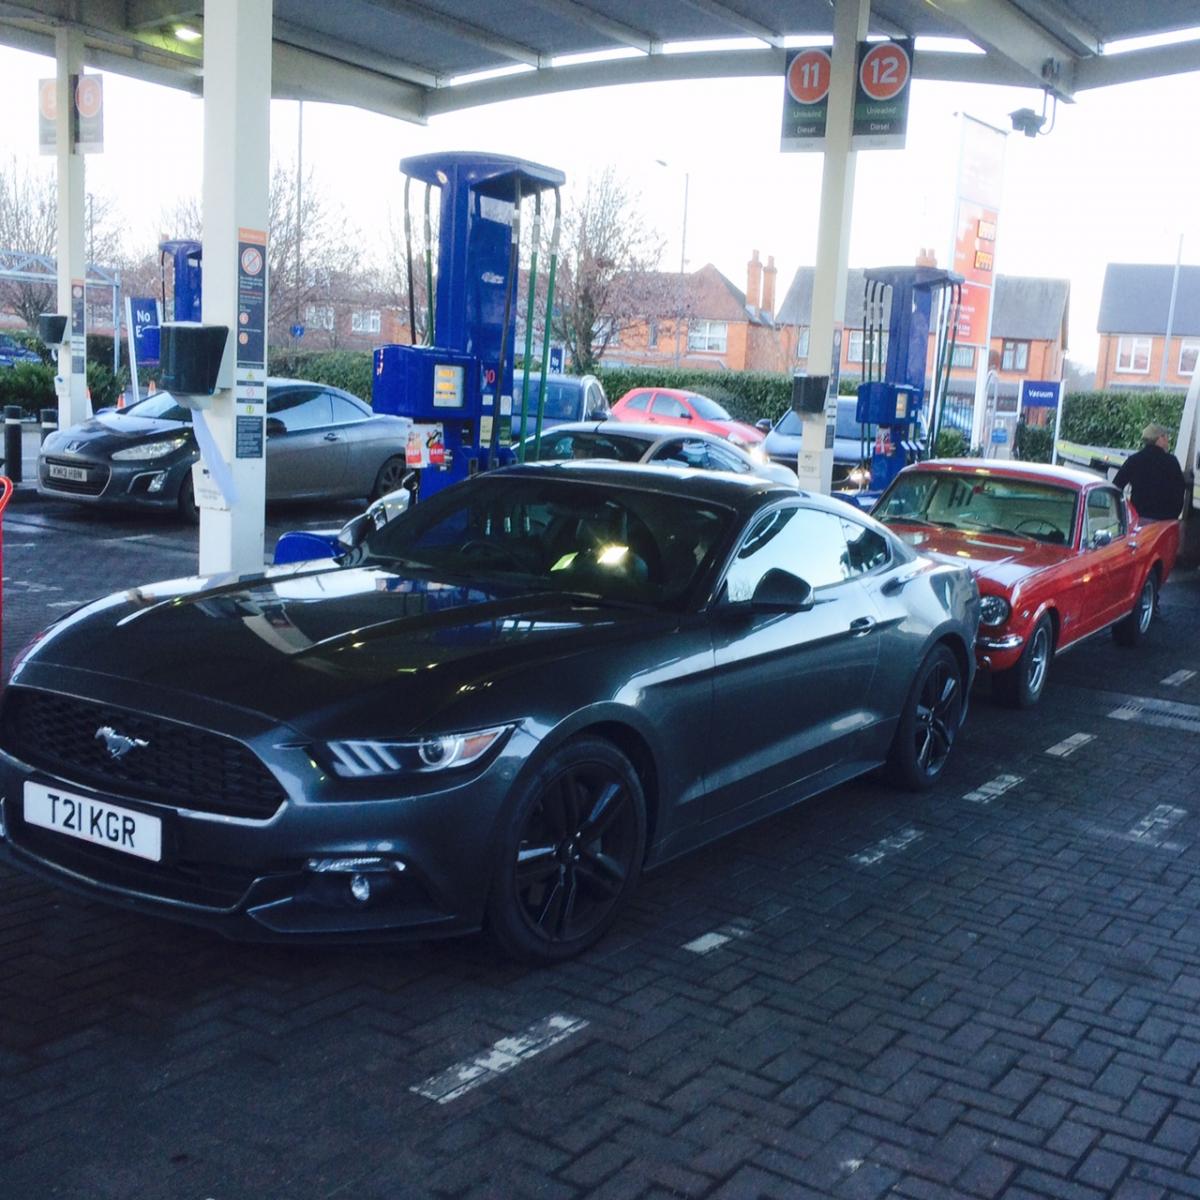 2016-01-16 Mustang at Sainsburys.jpg